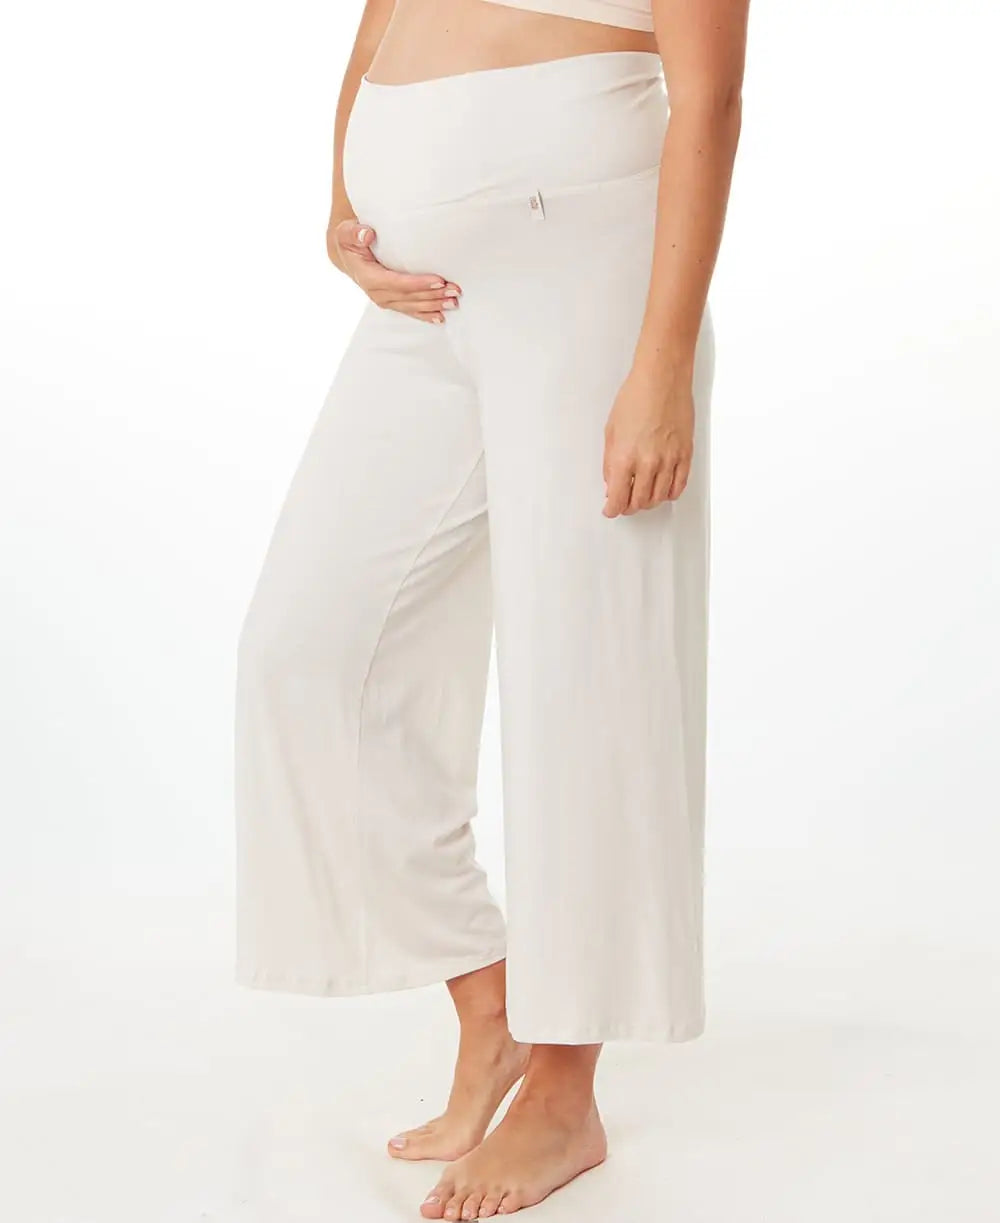 Maternity pants 7/8th Origin oats - Legging